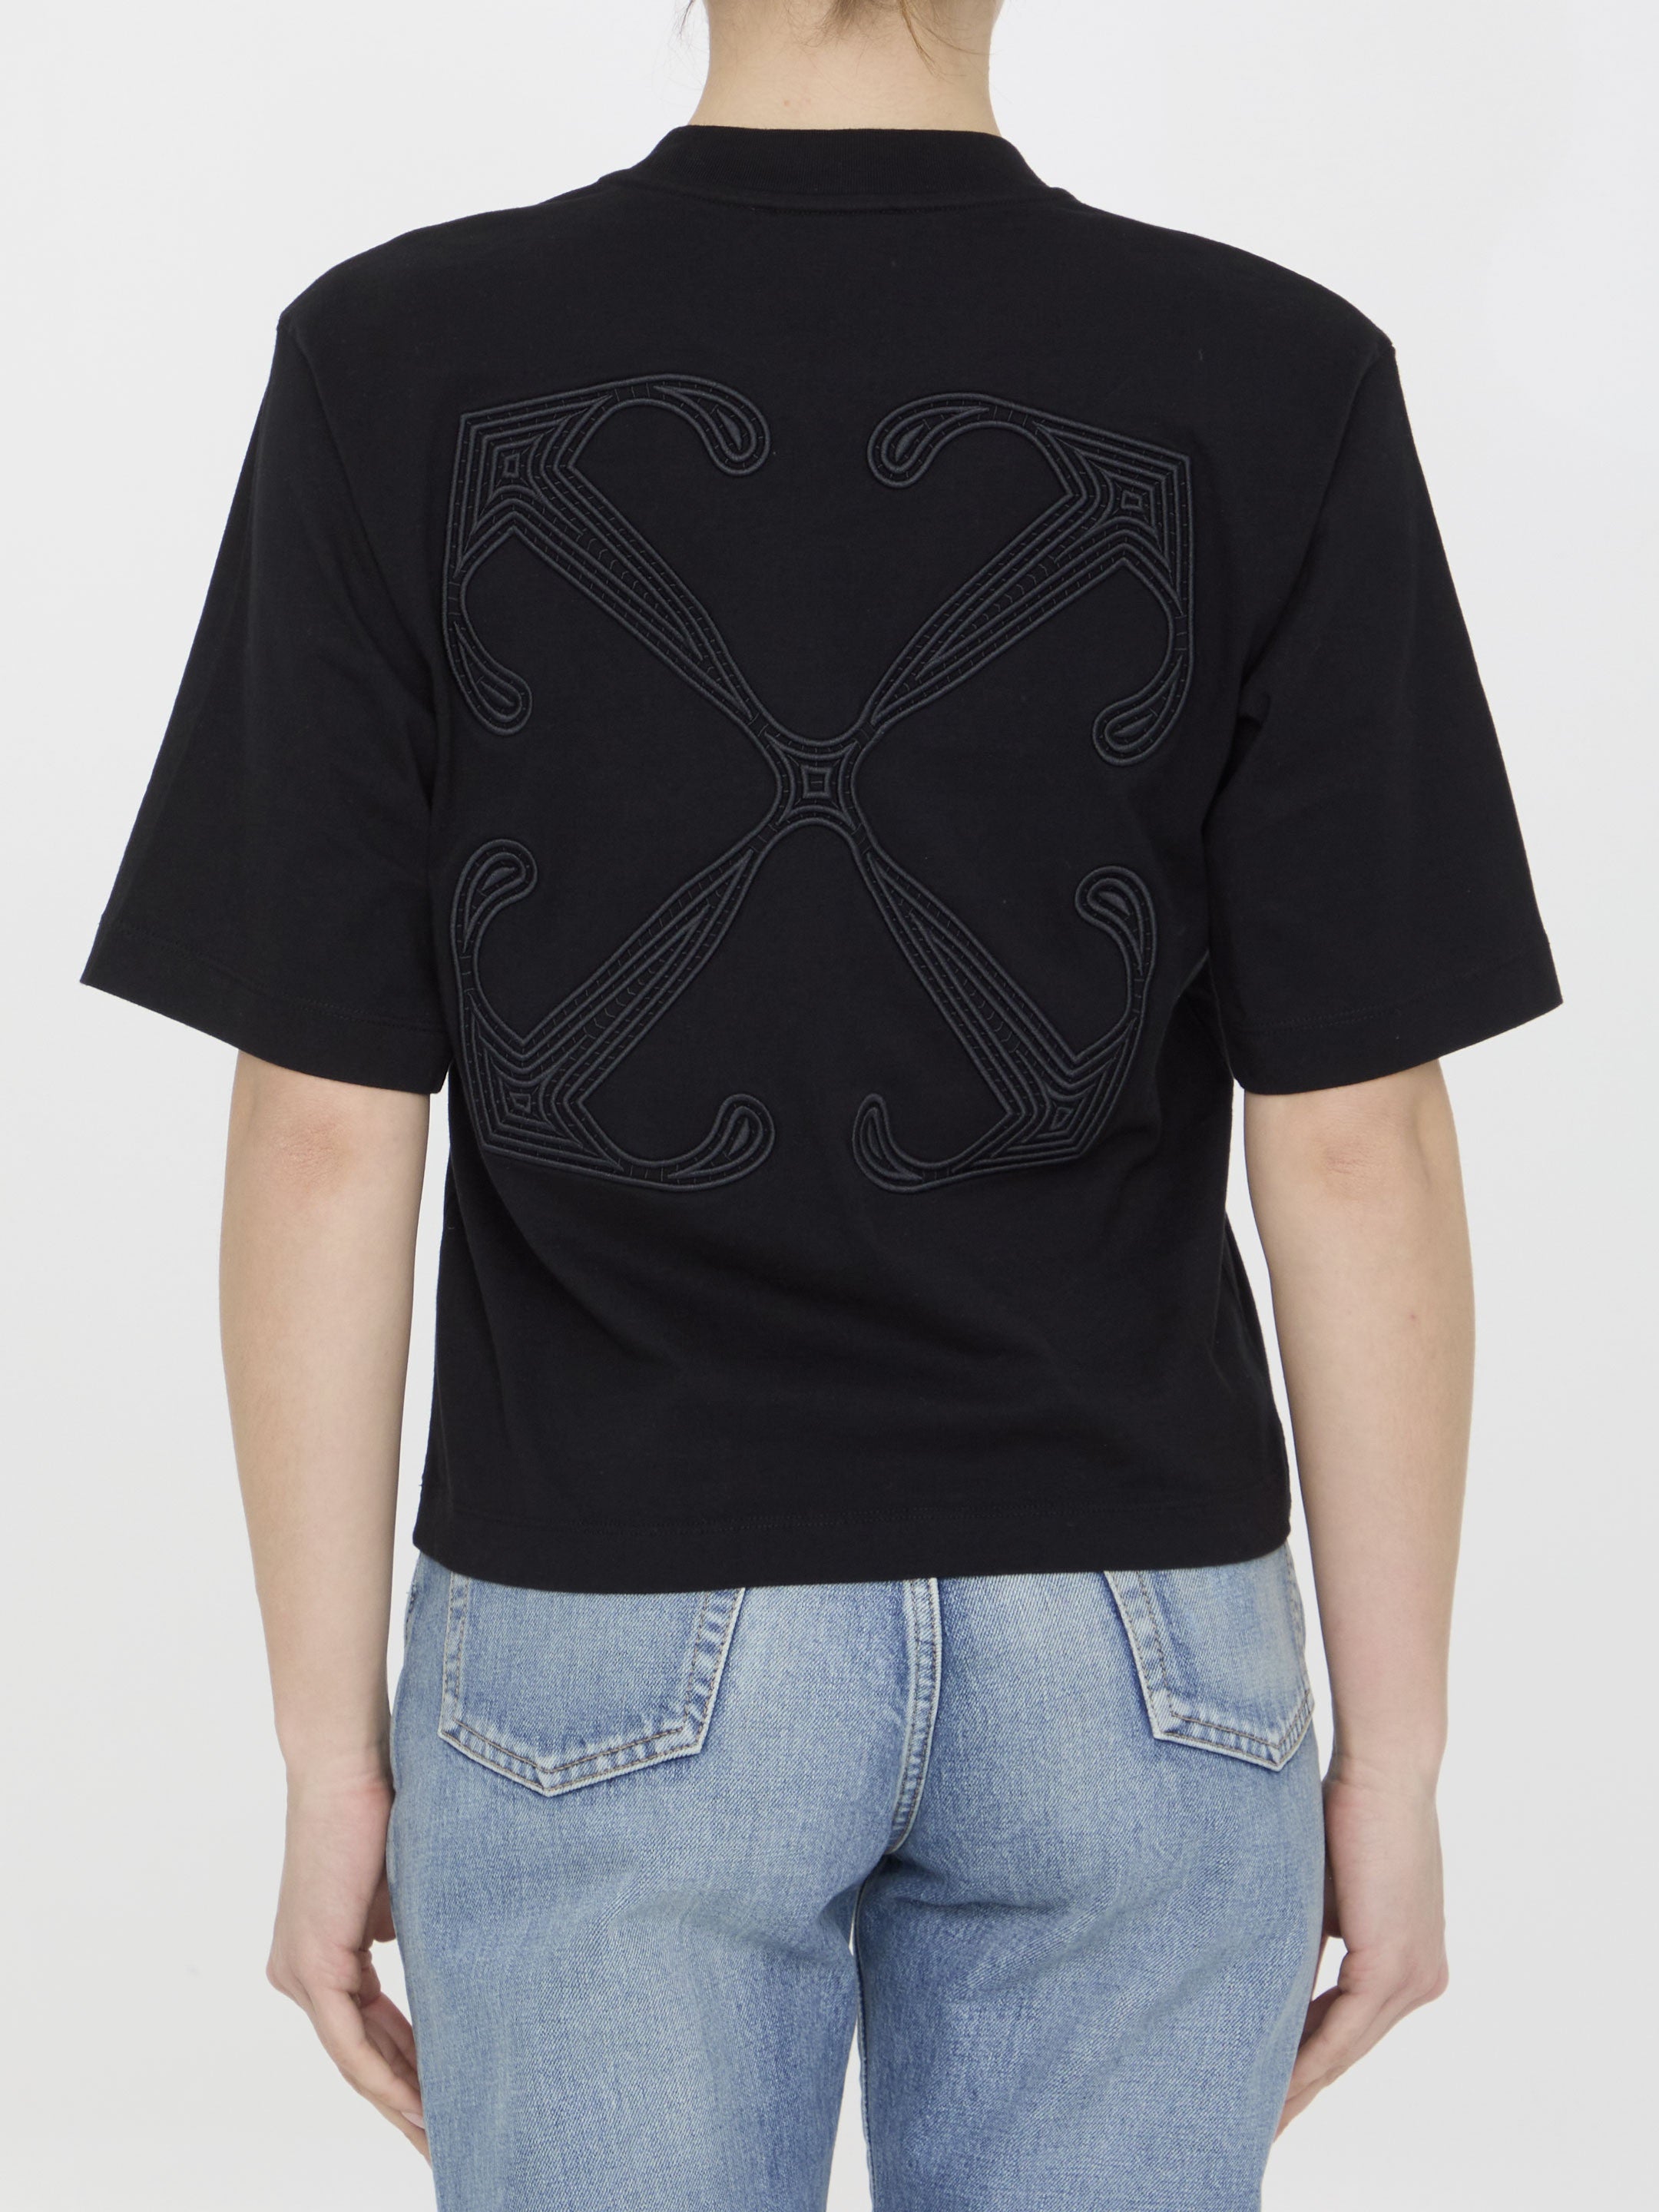 Arrow t-shirt